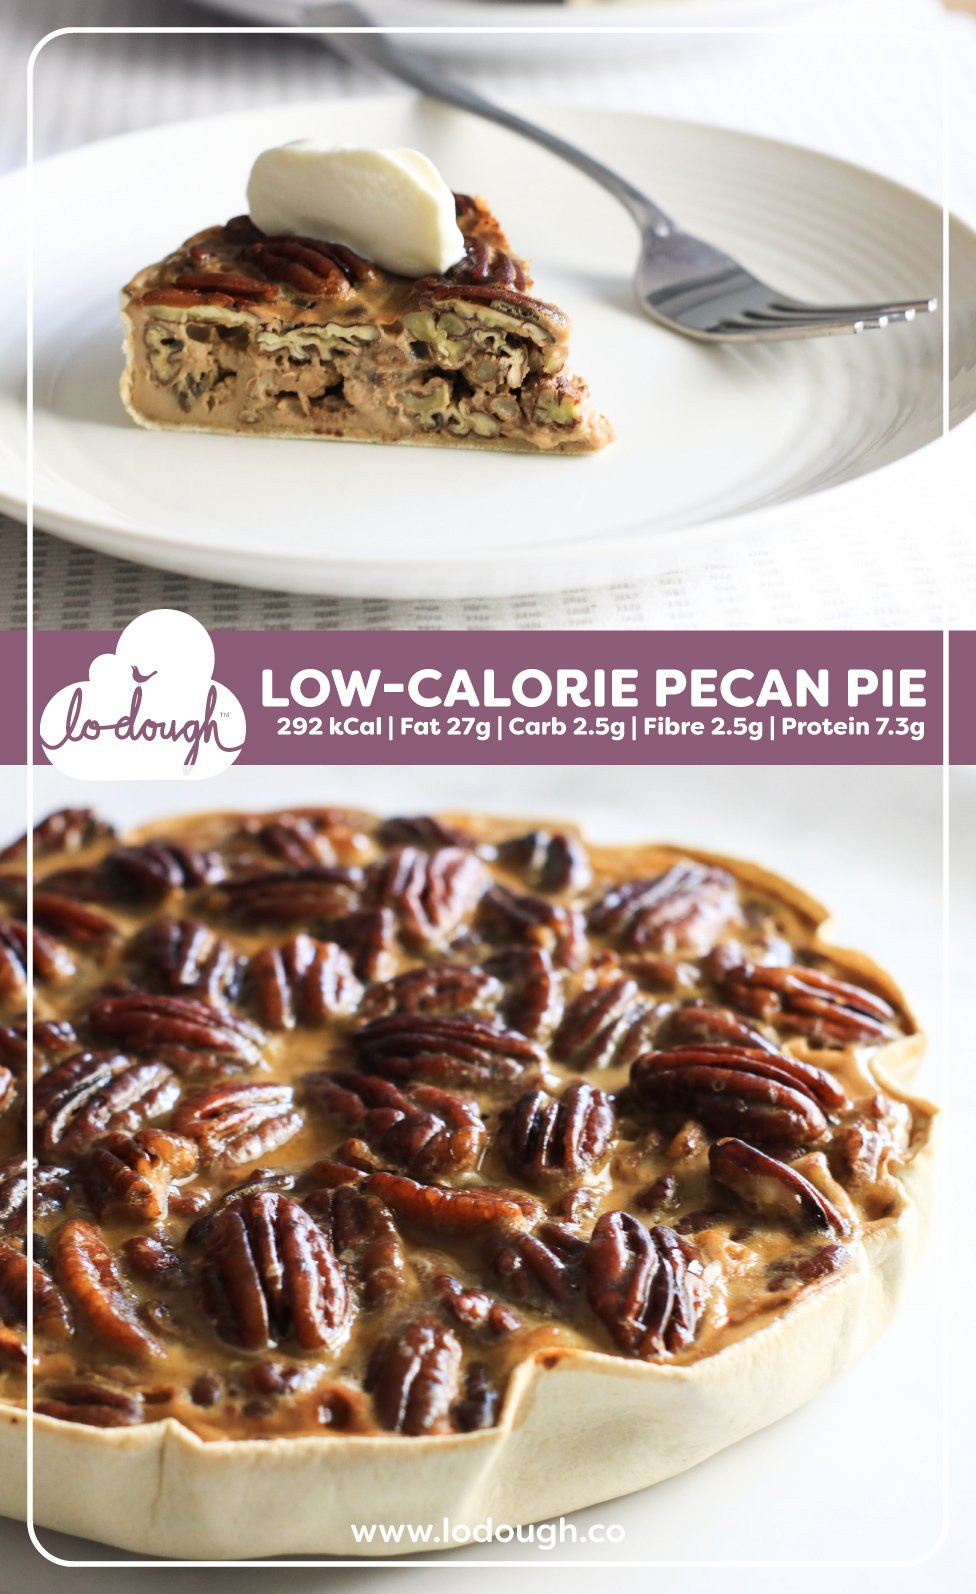 Low Calorie Pecan Pie Beautiful Low Calorie Pecan Pie – Lo Dough